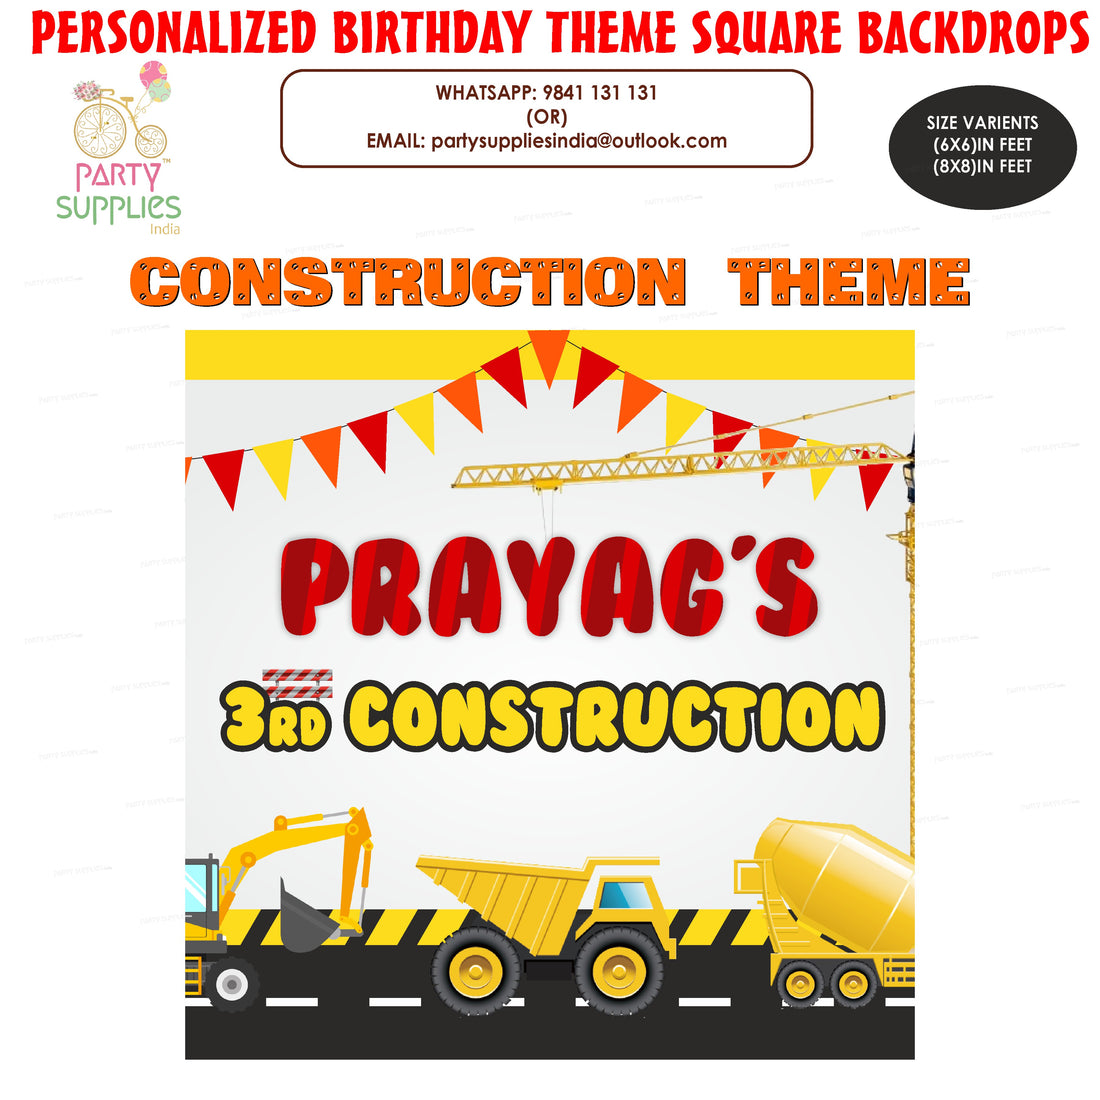 PSI Construction Theme Personalized Square Backdrop